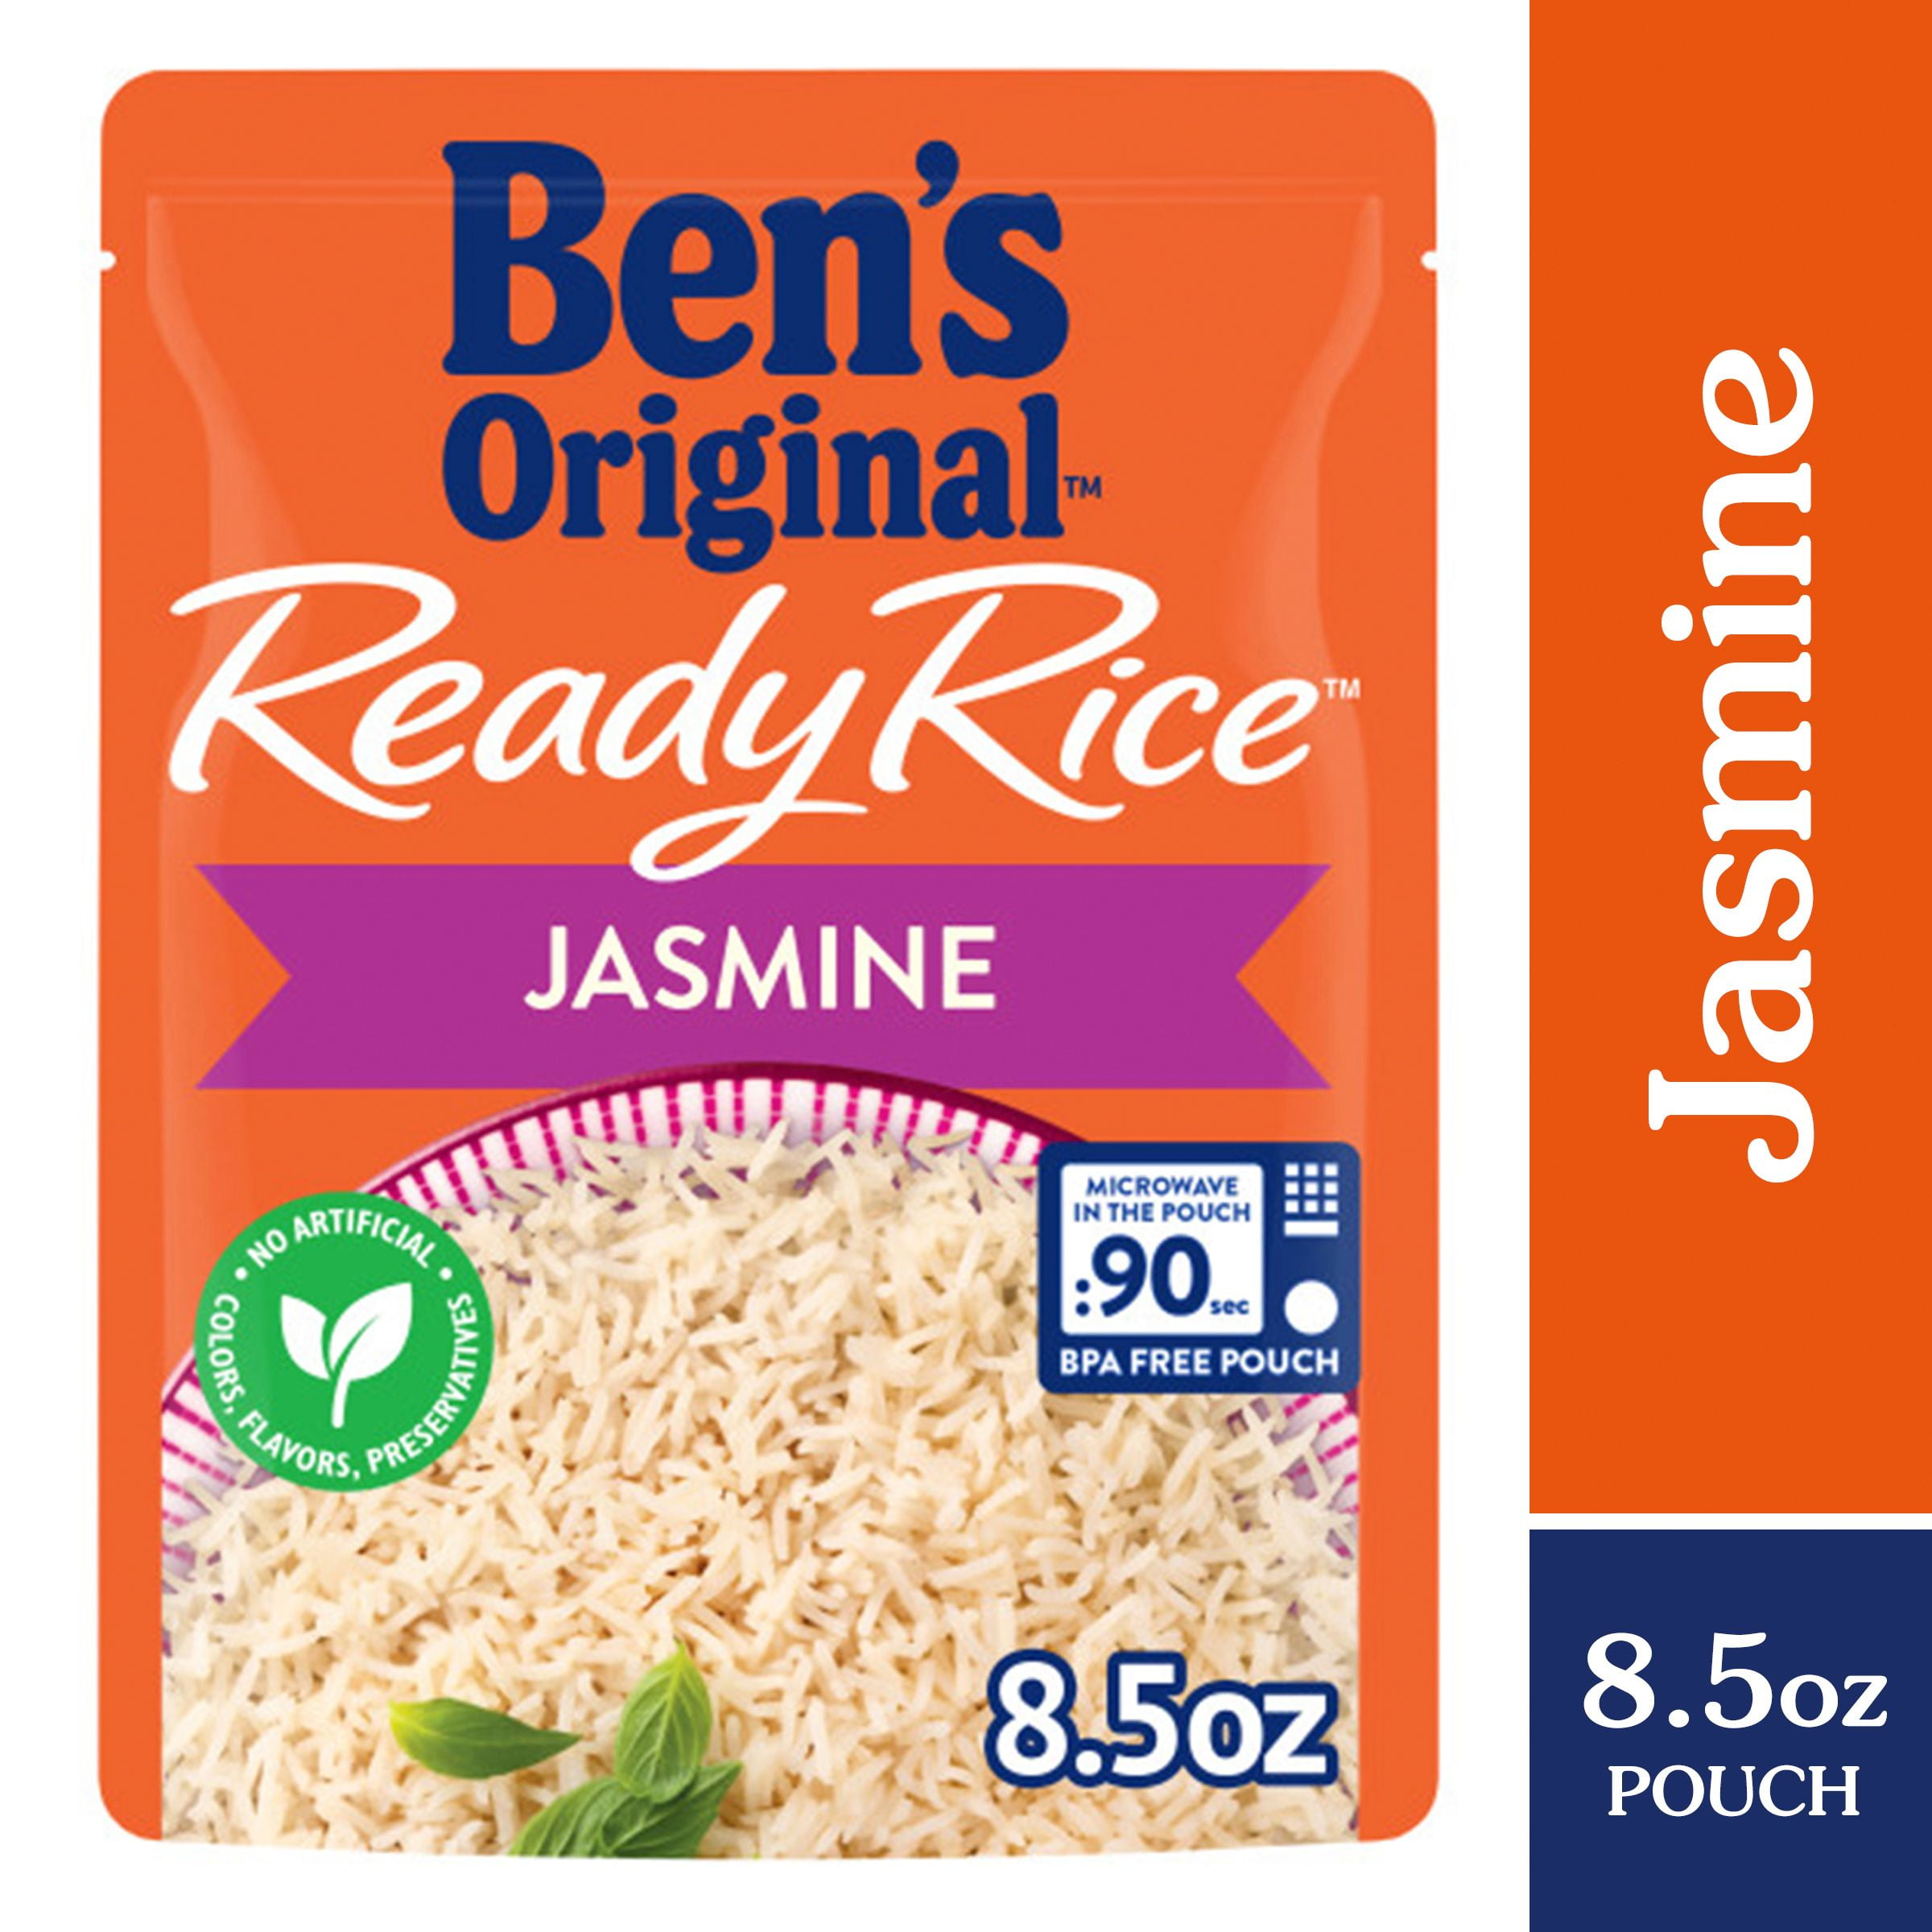 BEN'S ORIGINAL Ready Rice Jasmine Rice, Easy Dinner Side, 8.5 OZ Pouch